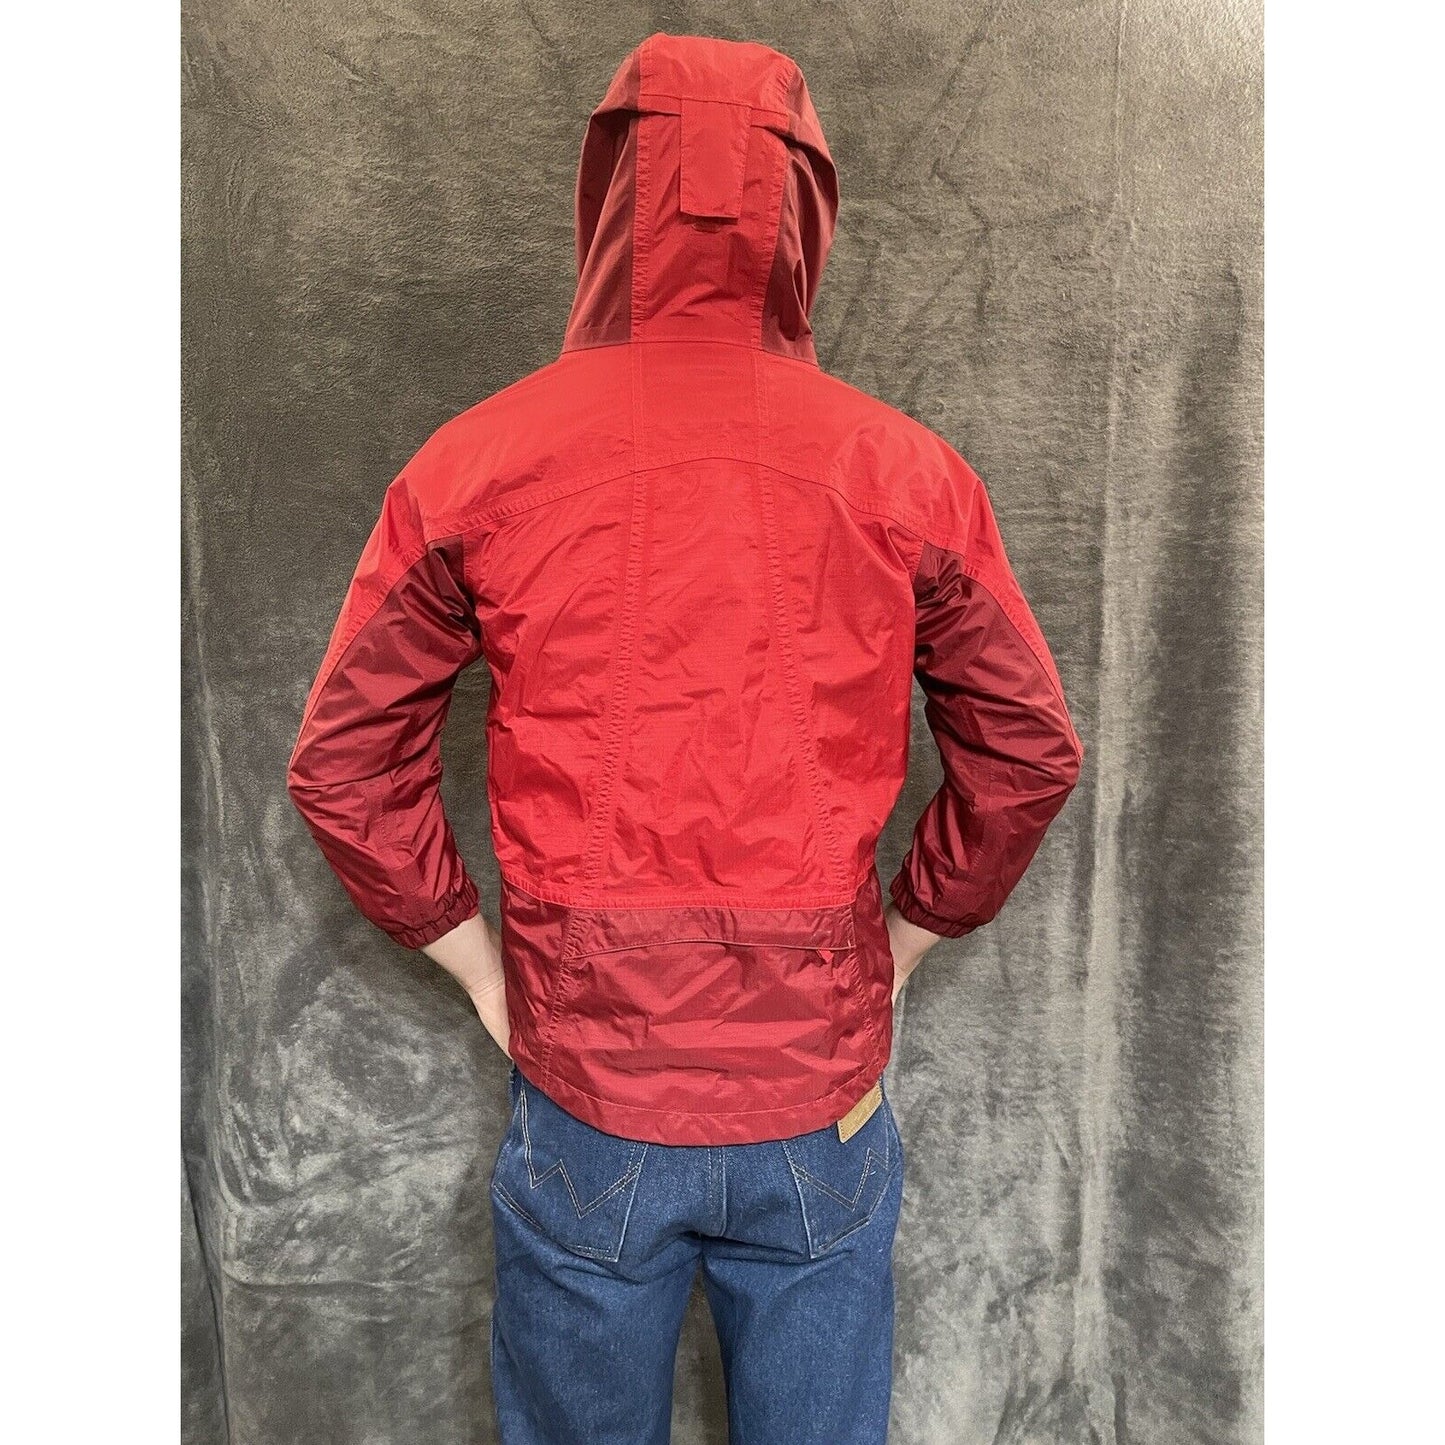 boy's L.L. Bean nylon poly medium 10-12 red jacket